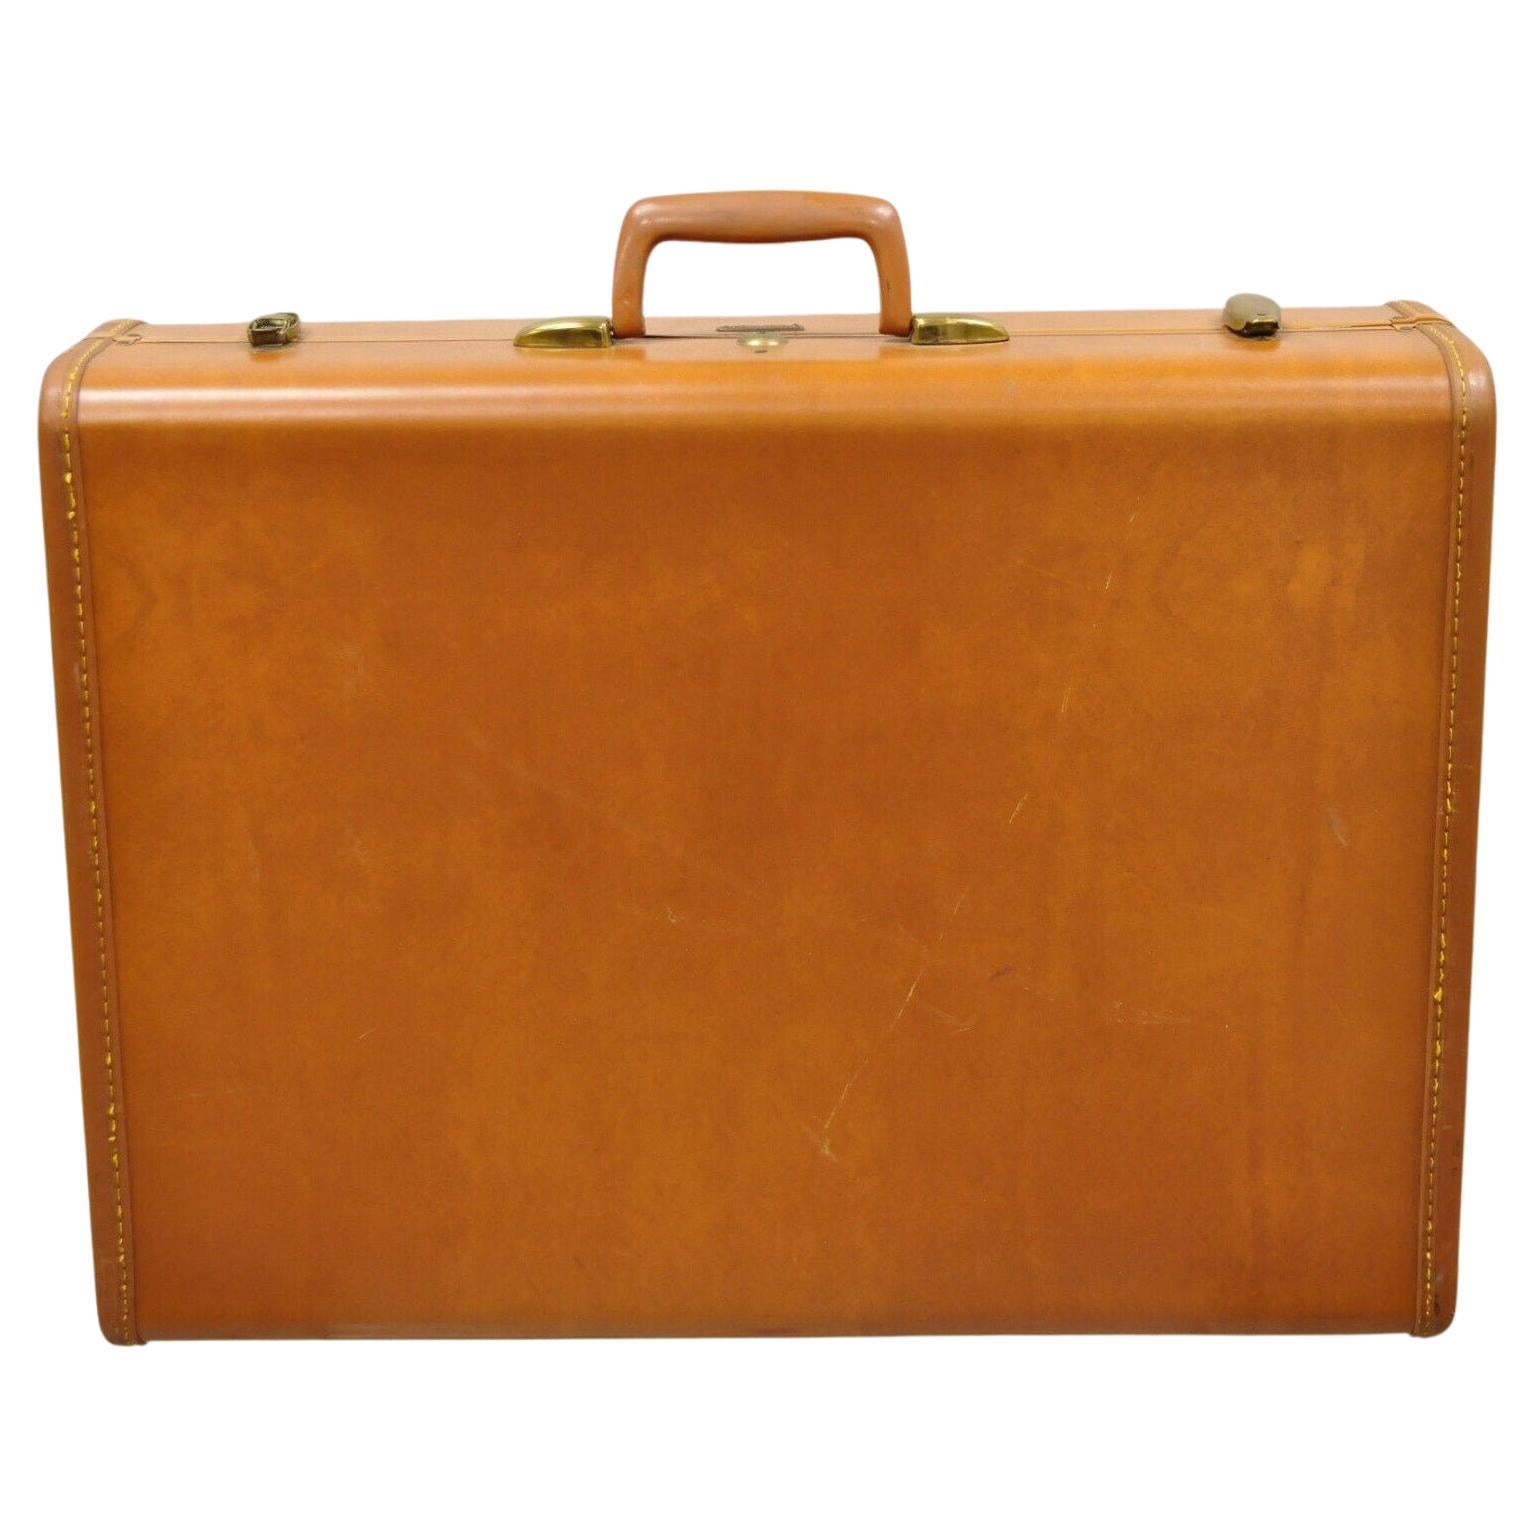 Vintage Samsonite Orange Leather Suitcase Travel Luggage Bag